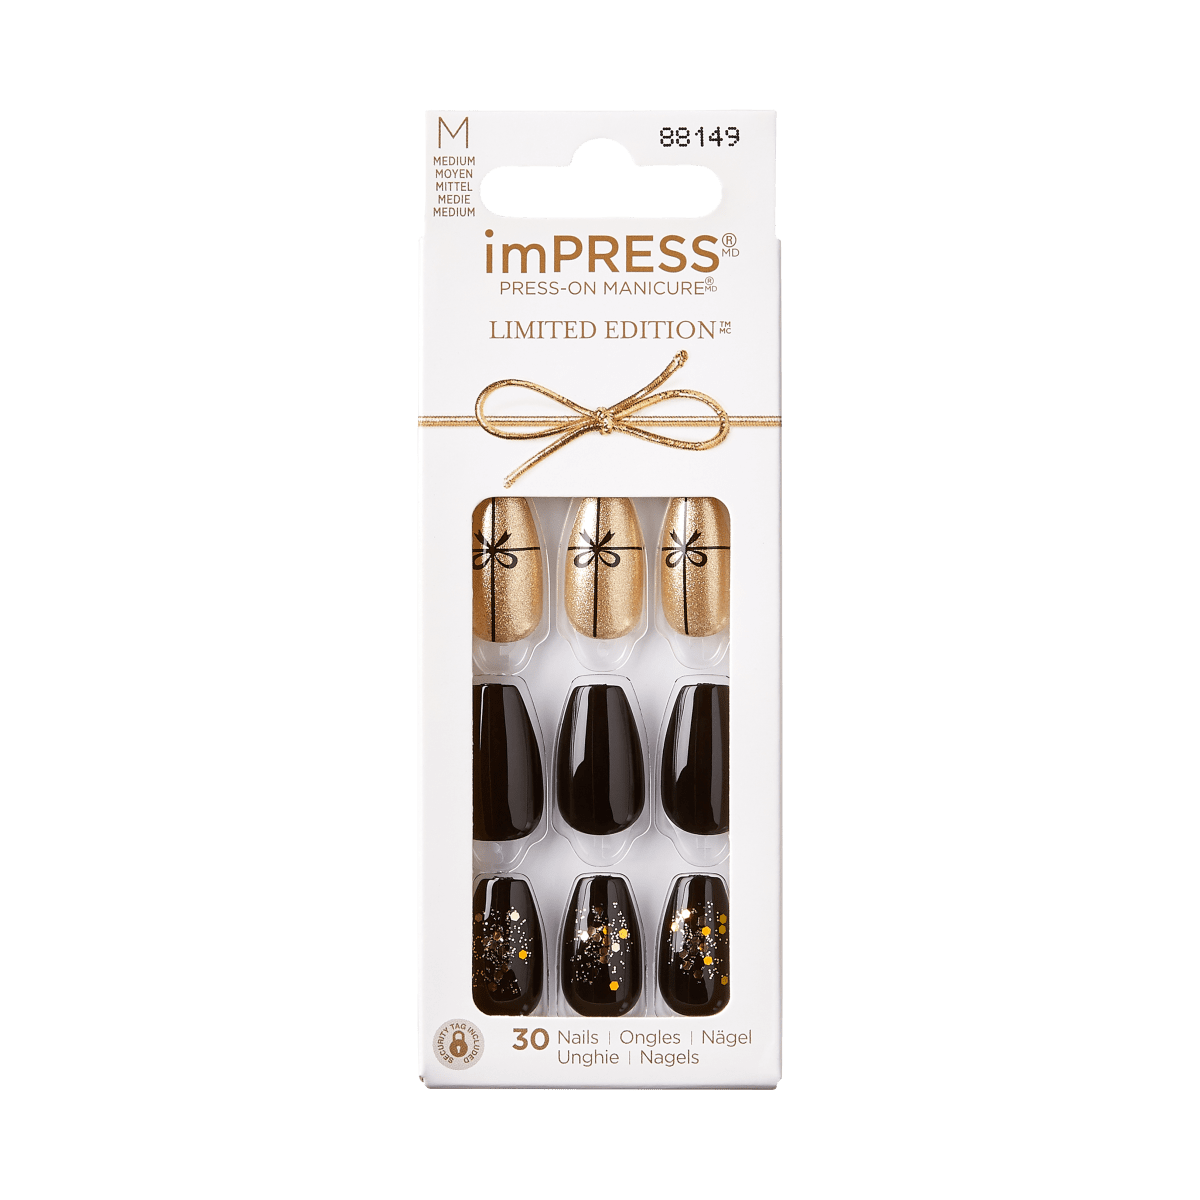 KISS imPRESS No Glue Mani Press On Nails, Design, Naughty or Nice, Black, Med Coffin, 30ct